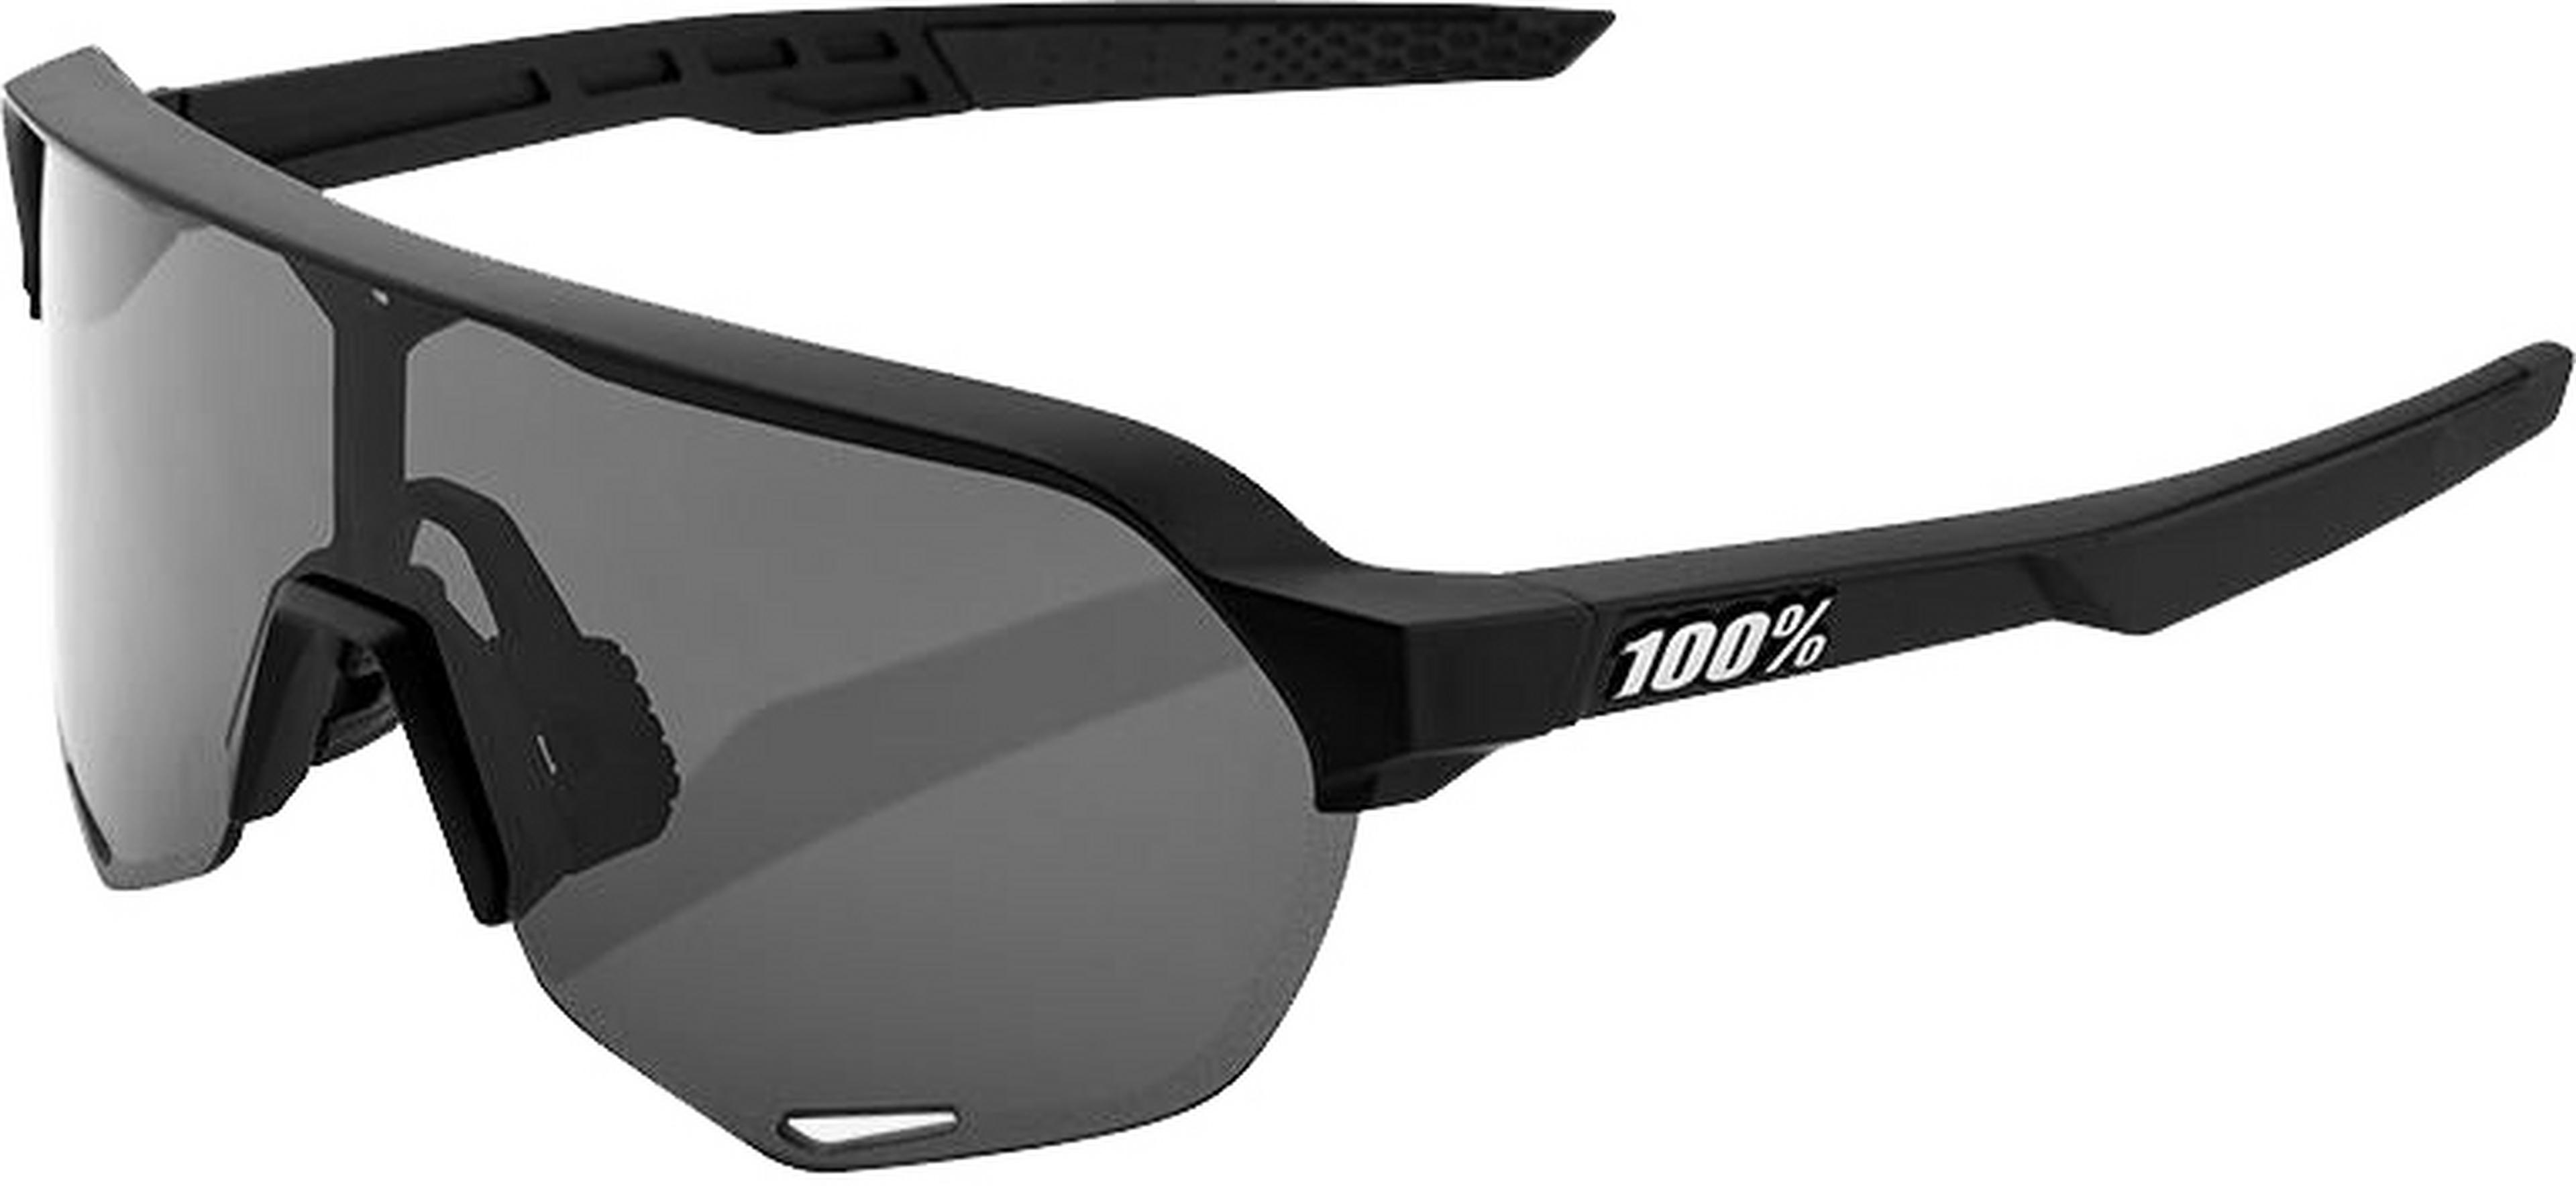 100% Eyewear S2 Soft Tact Black Smoke Lens Sunglasses | Wiggle